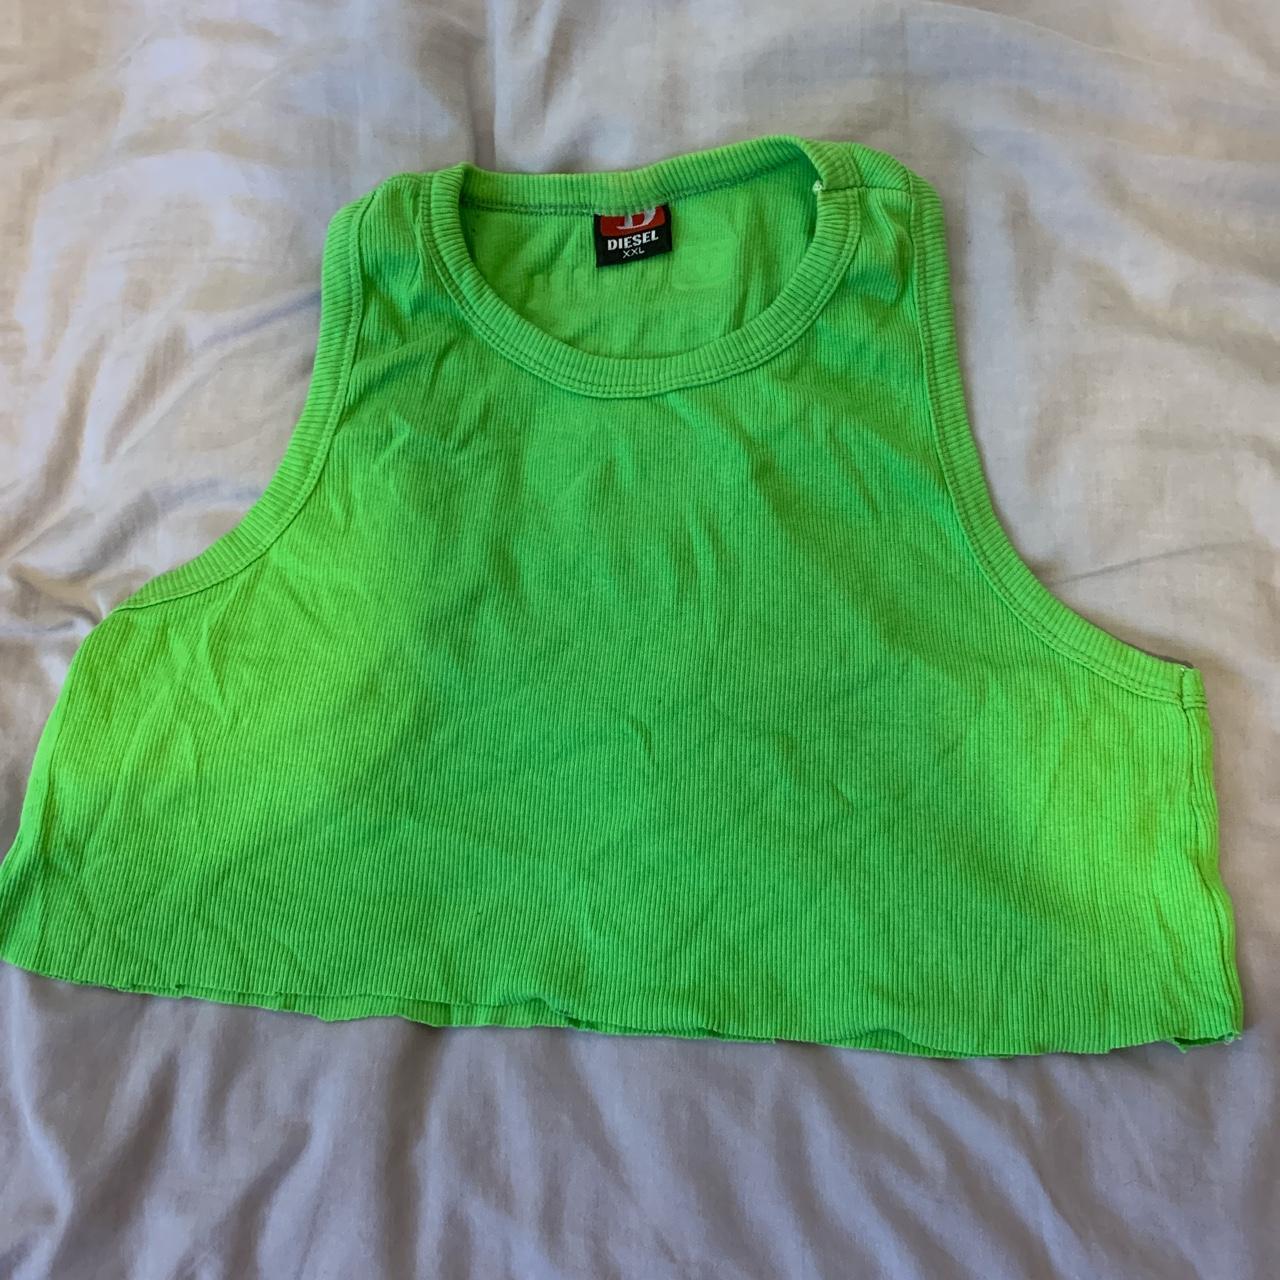 Cropped Diesel green vest top 💚 Would fit size 6-10... - Depop